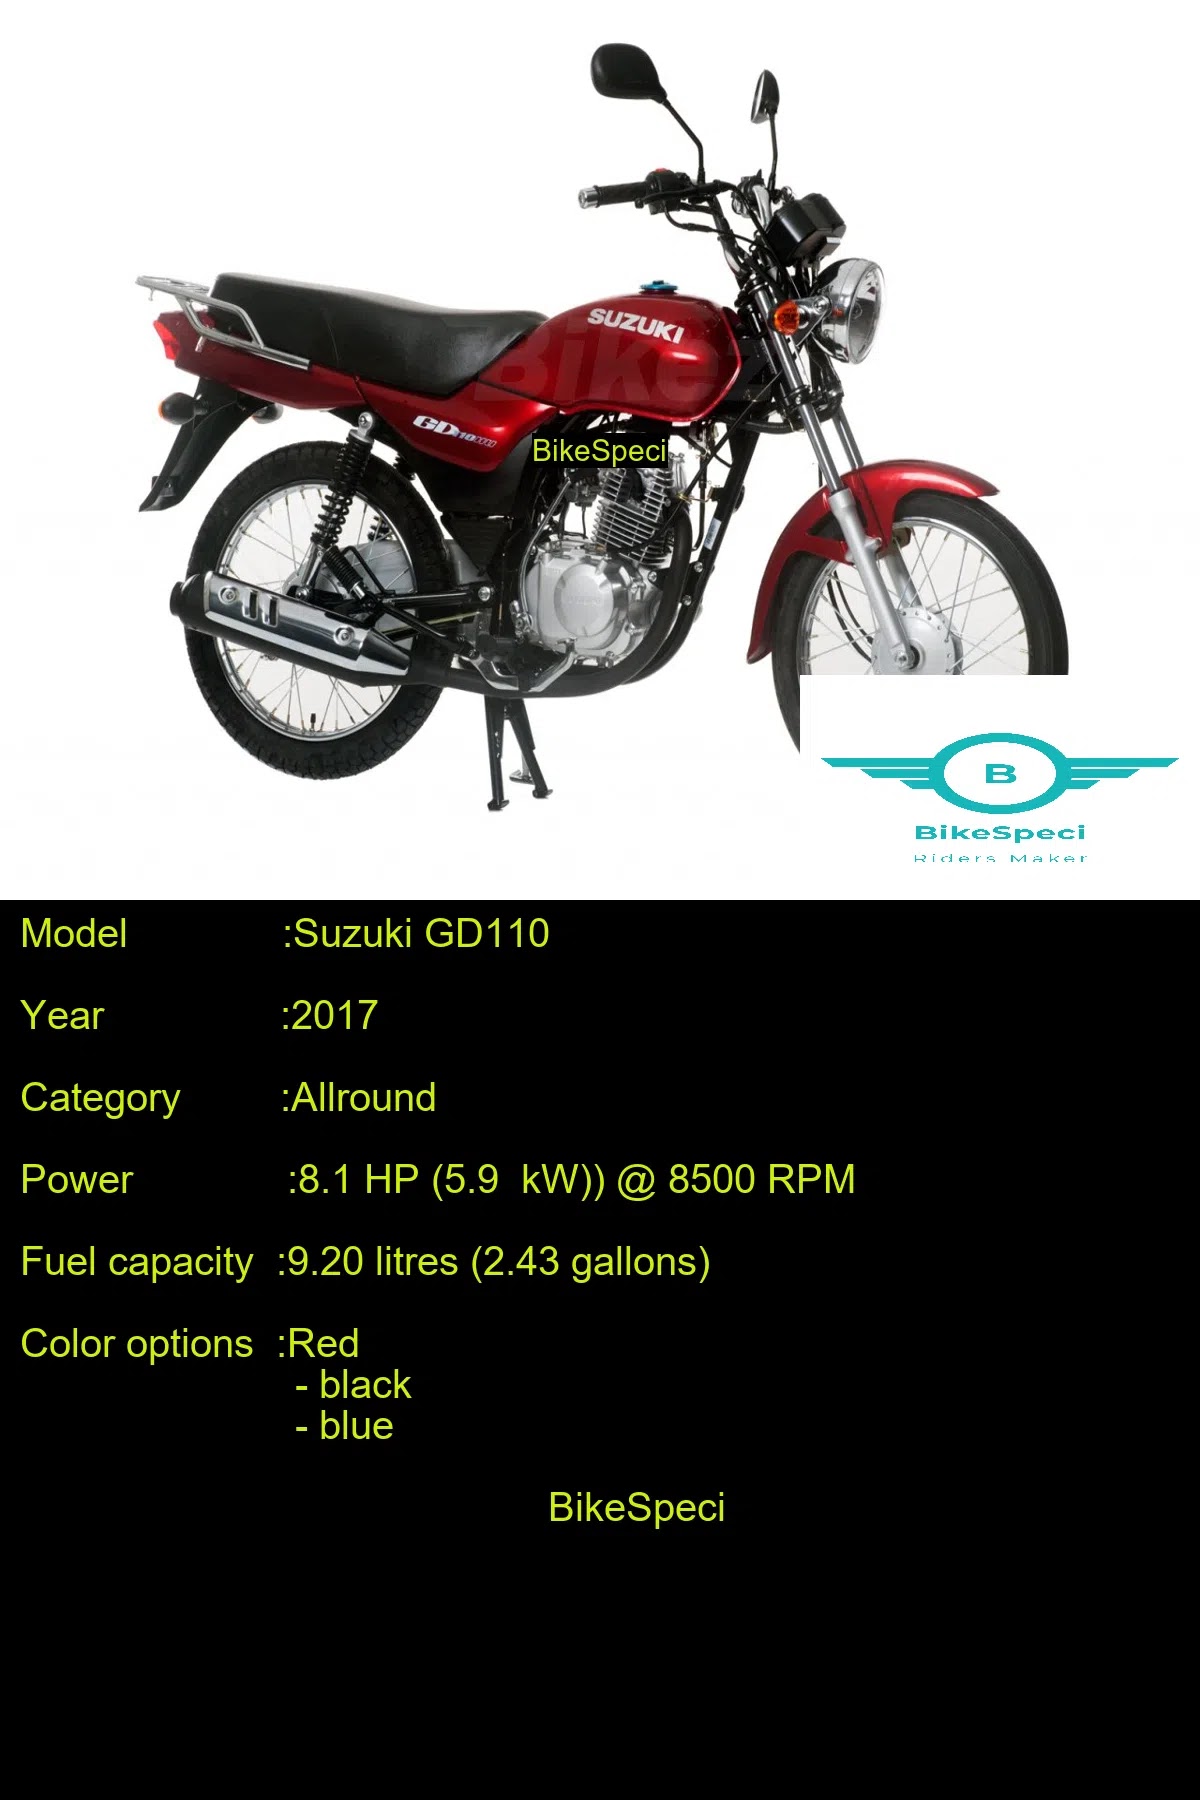 Suzuki GD110 | Price, Photos, Millage, Speed, Colours etc.